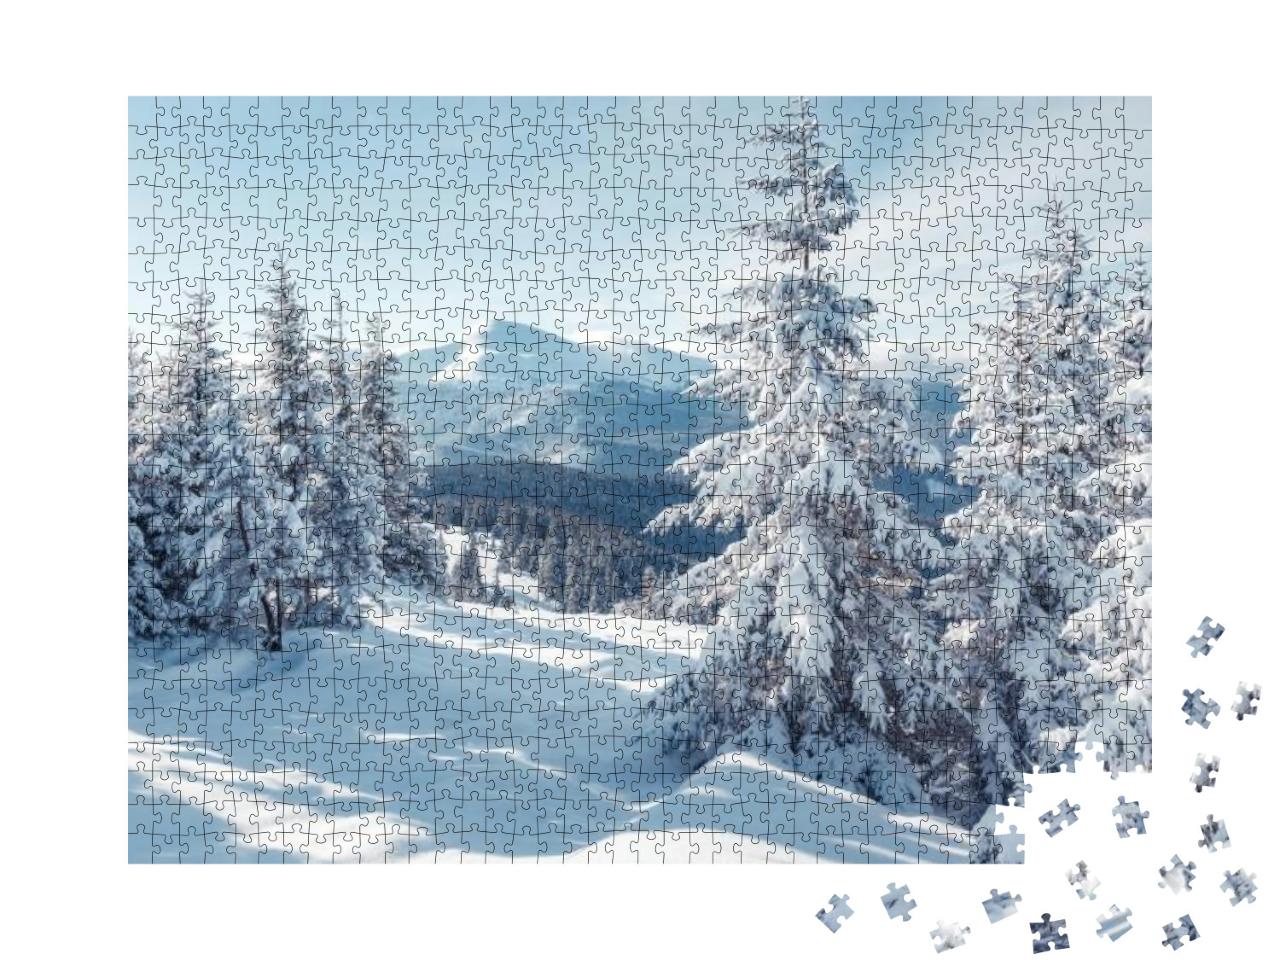 Splendid Alpine Scenery in Winter. Fantastic Frosty Morni... Jigsaw Puzzle with 1000 pieces